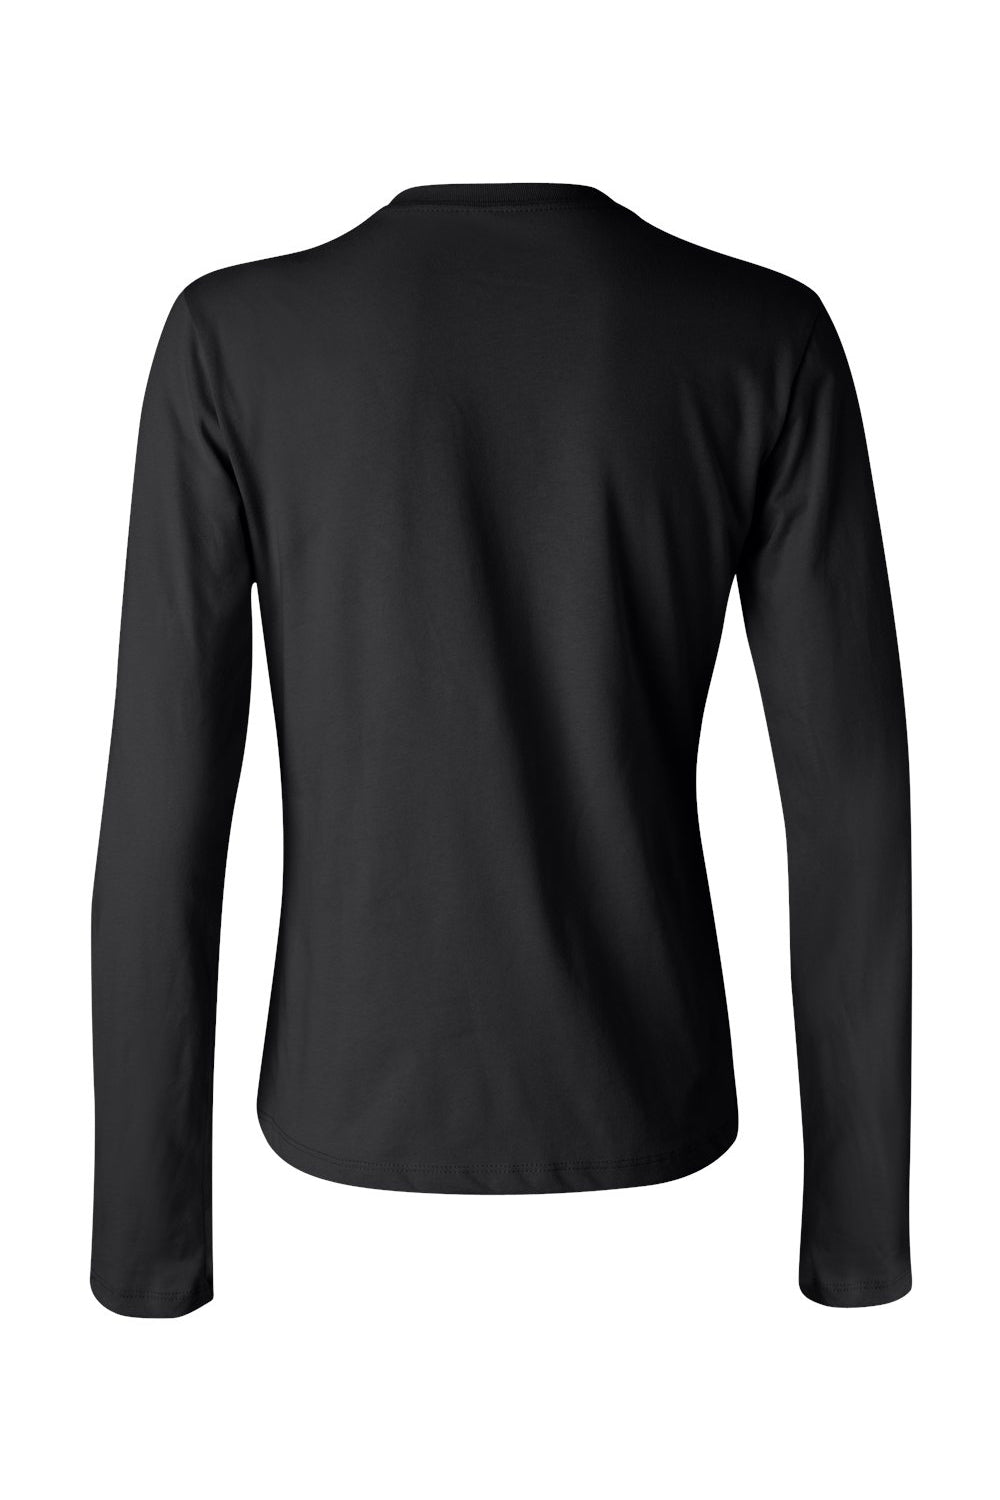 Bella + Canvas B6500/6500 Womens Jersey Long Sleeve Crewneck T-Shirt Black Flat Back